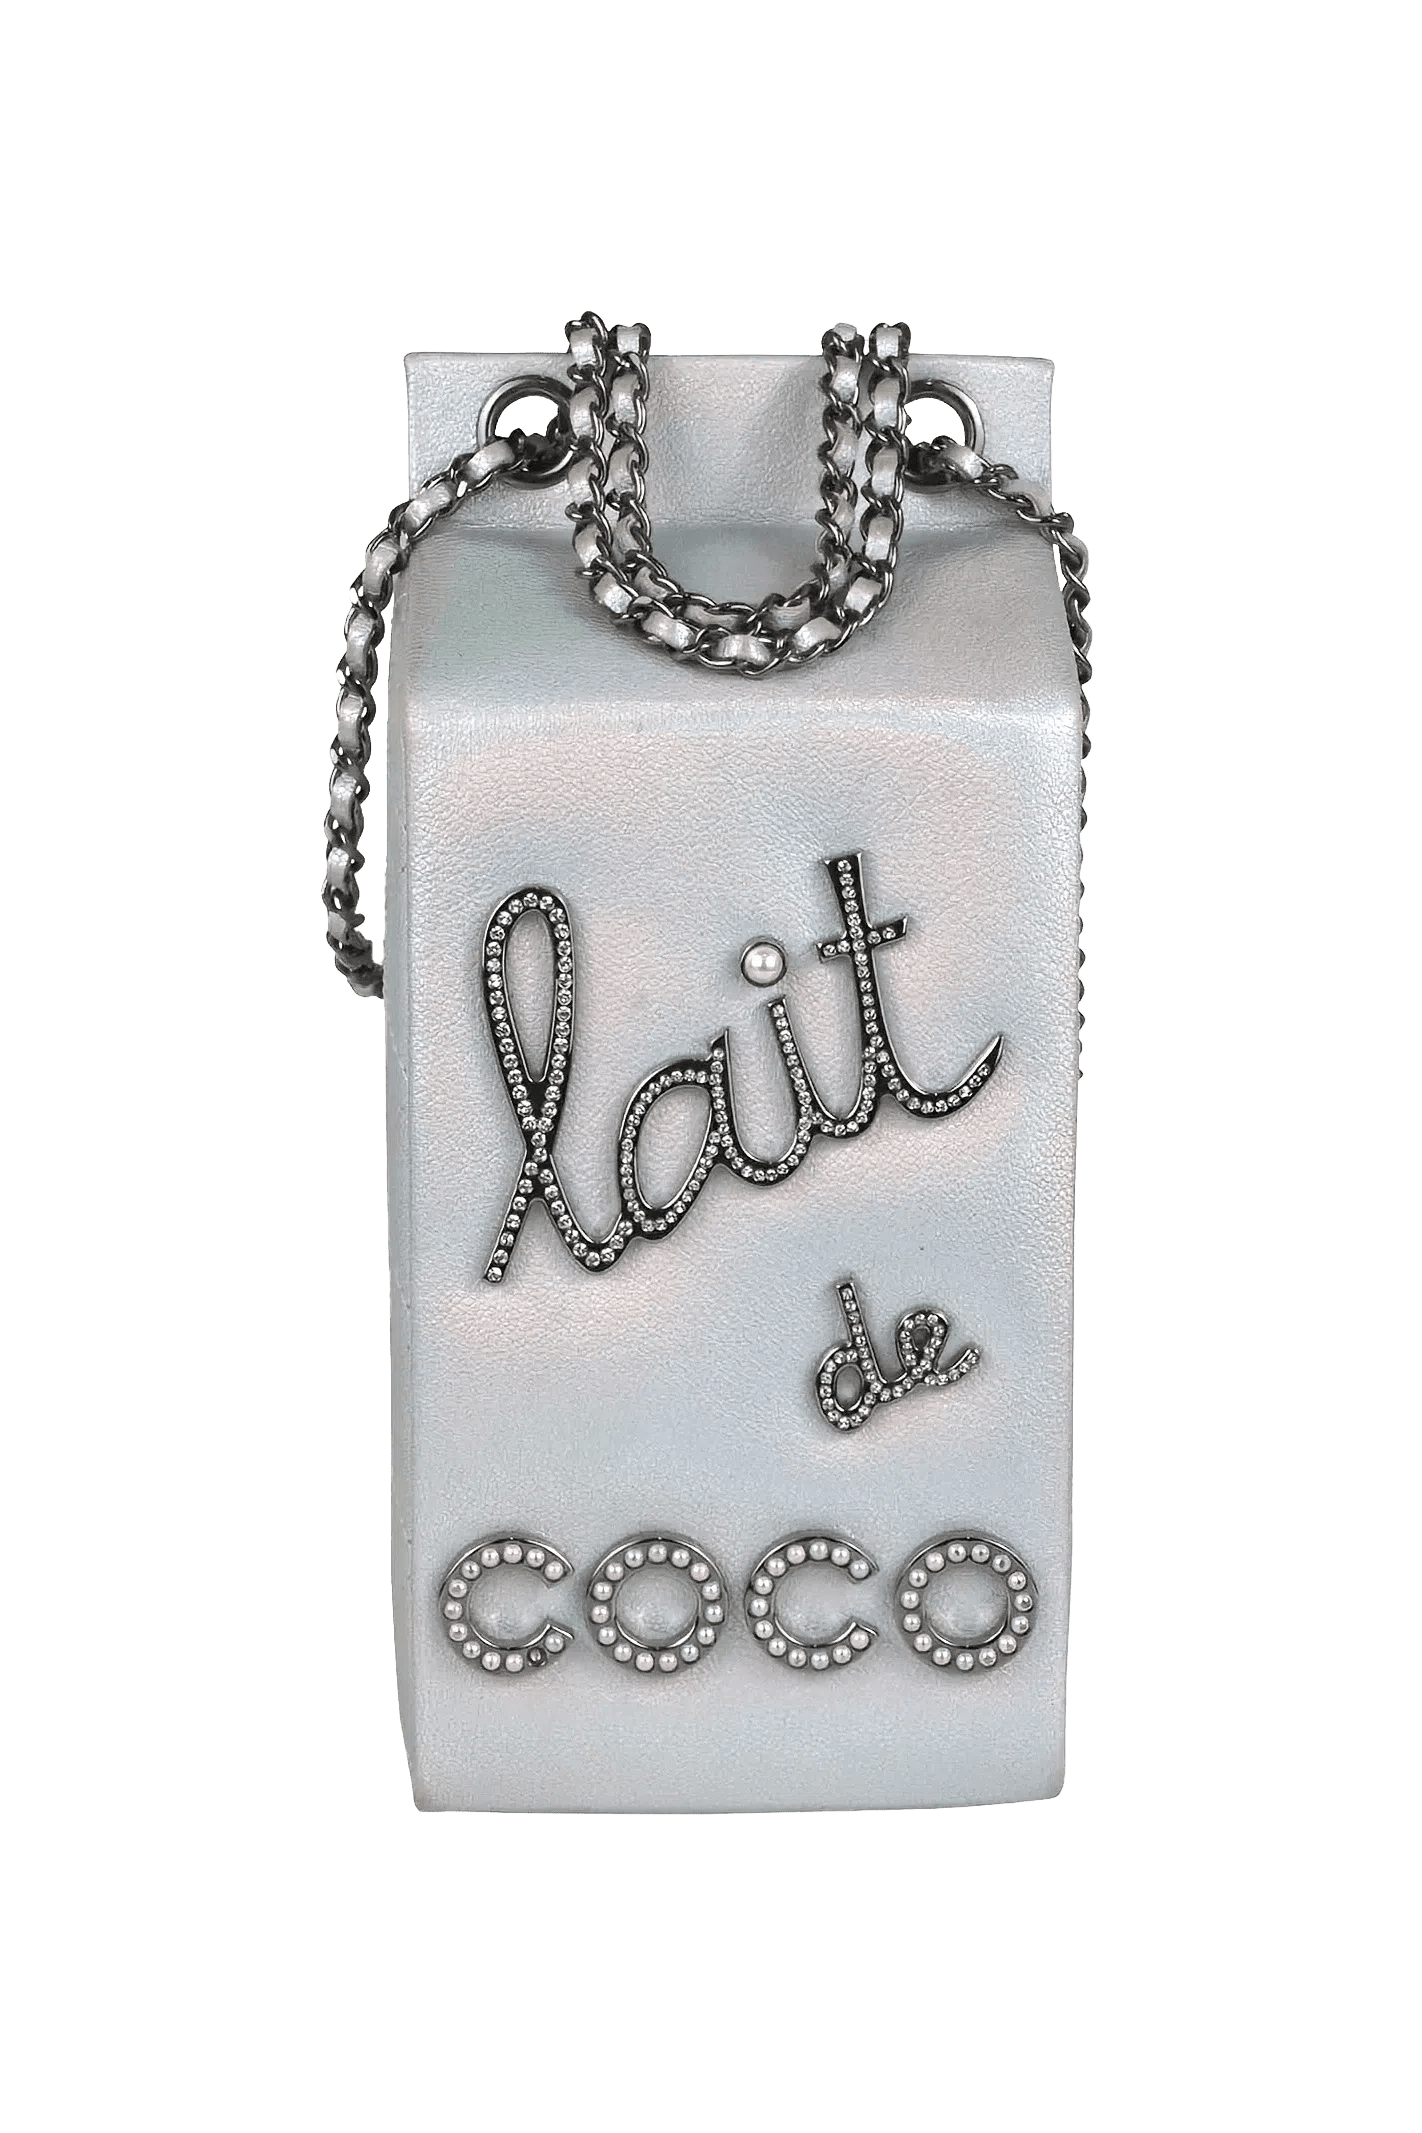 Chanel Rare Limited Edition Lait de Coco Milk Carton Bag 2014 - Foxy Couture Carmel